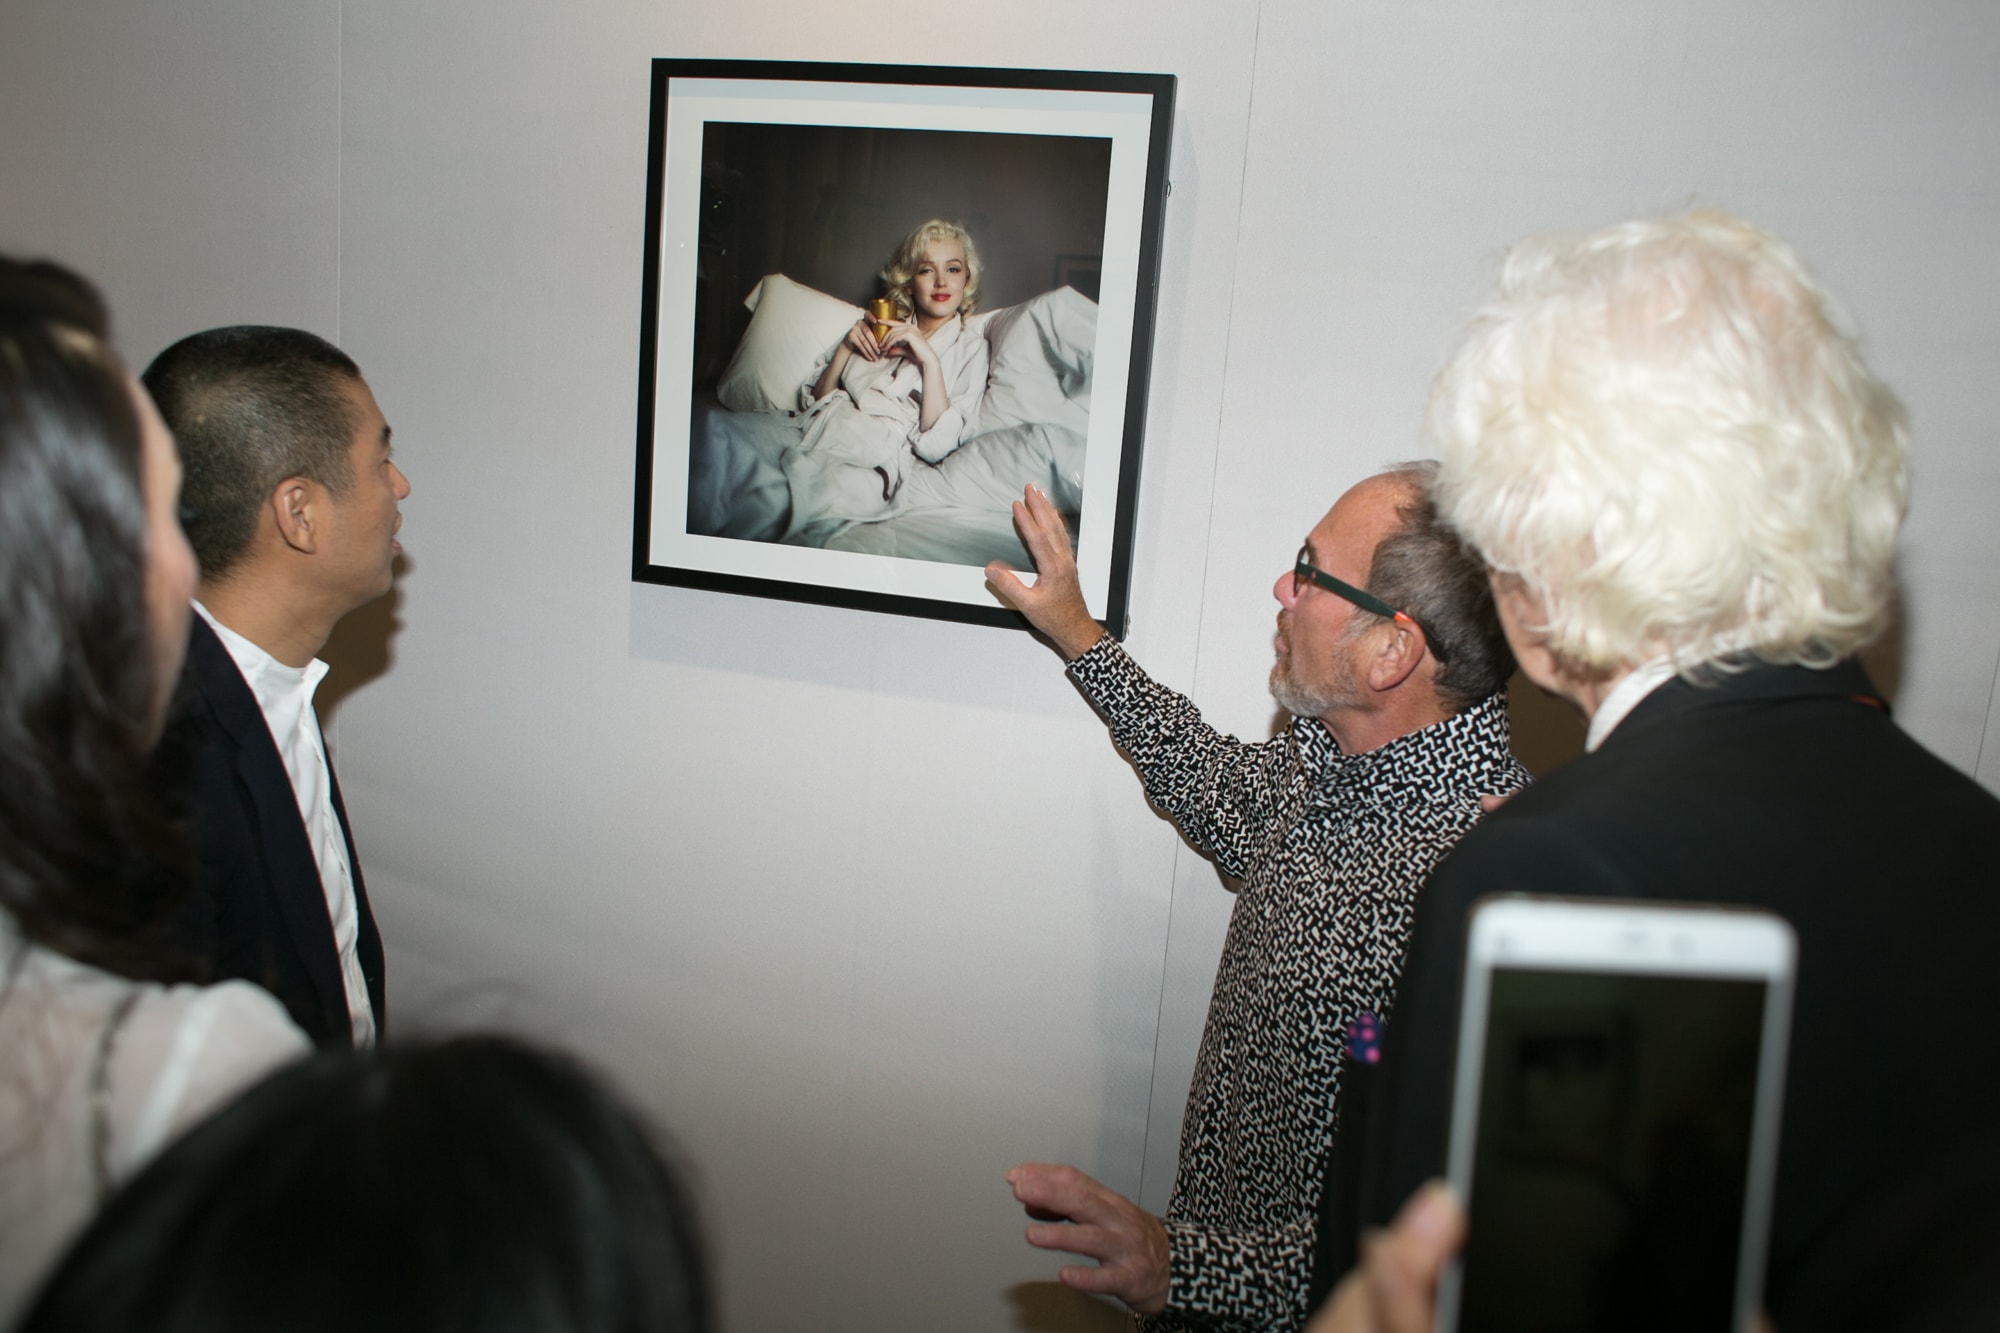 Meeting Marilyn Monroe at Baoku Art Center, Shanghai Tower